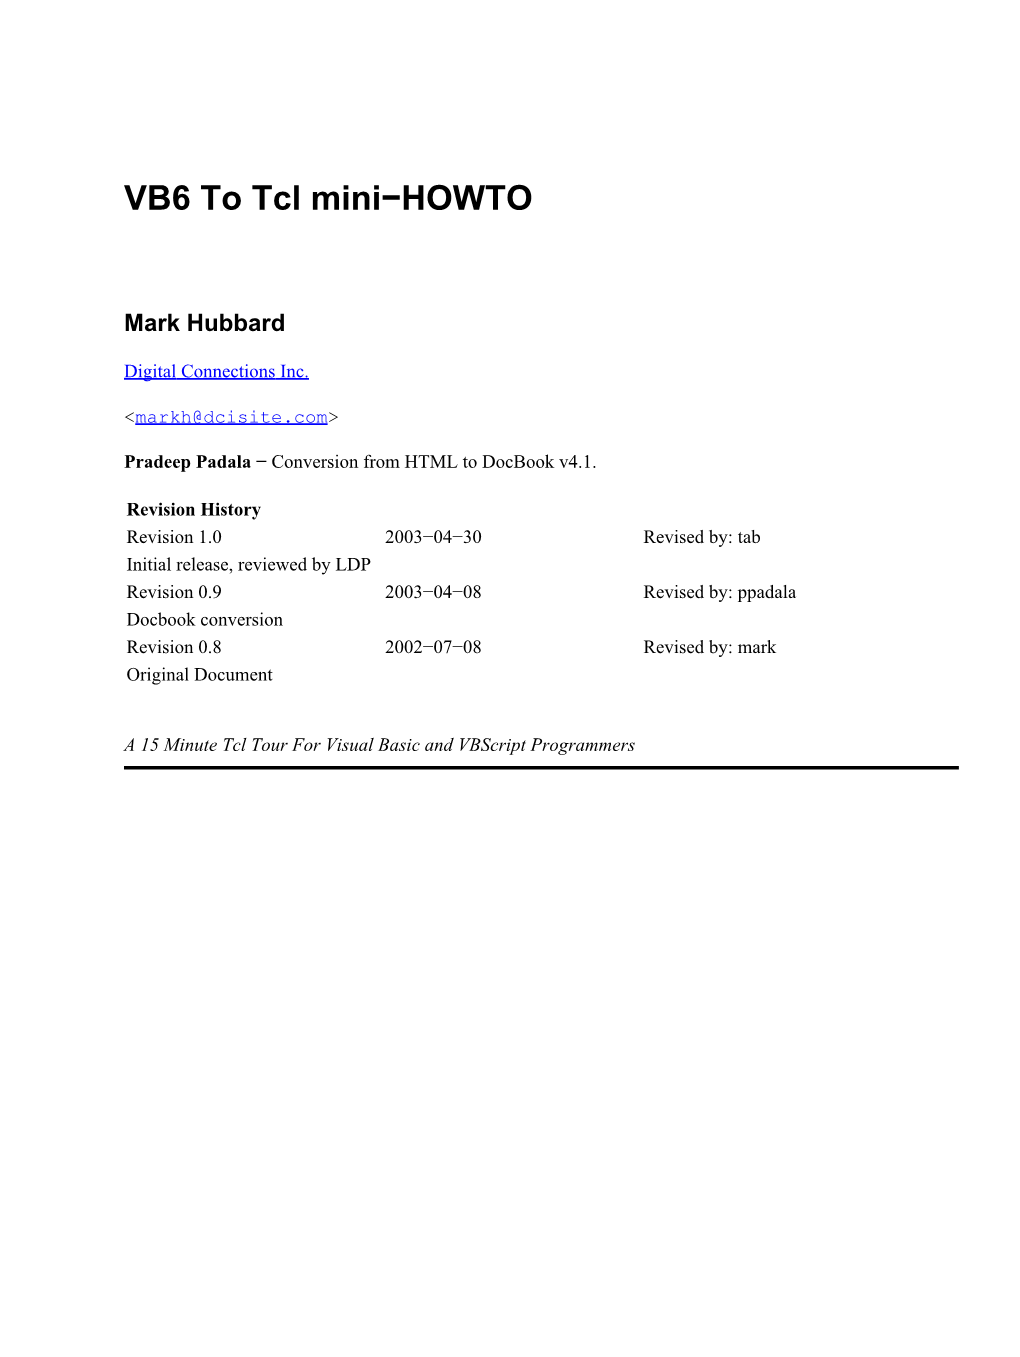 VB6 to Tcl Mini-HOWTO